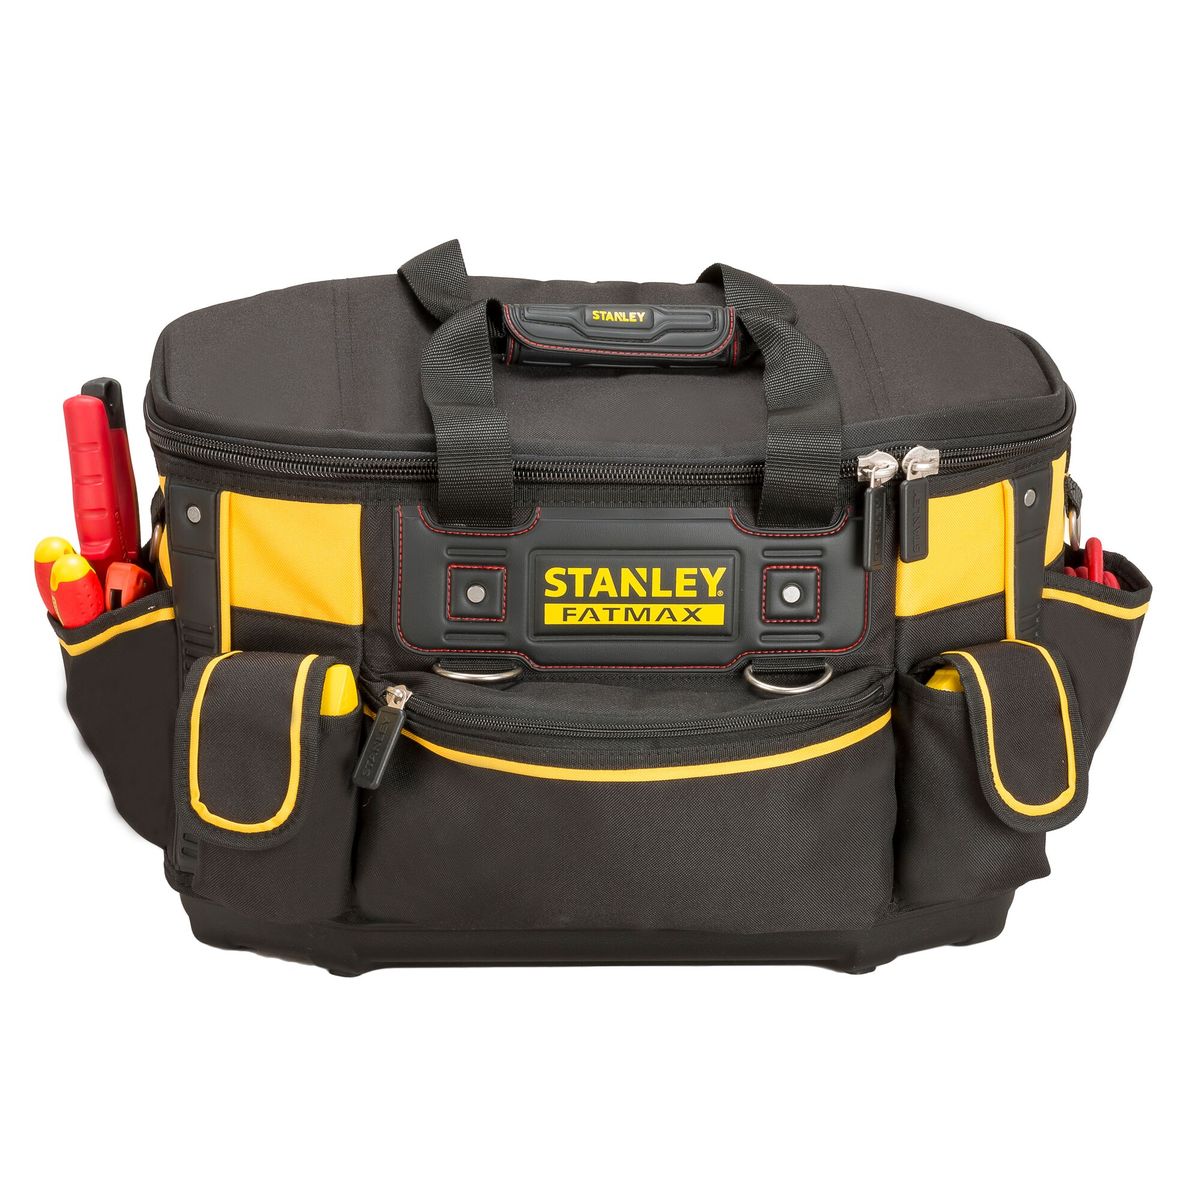 STANLEY® FATMAX® 18 in. Round Top Rigid Tool Bag